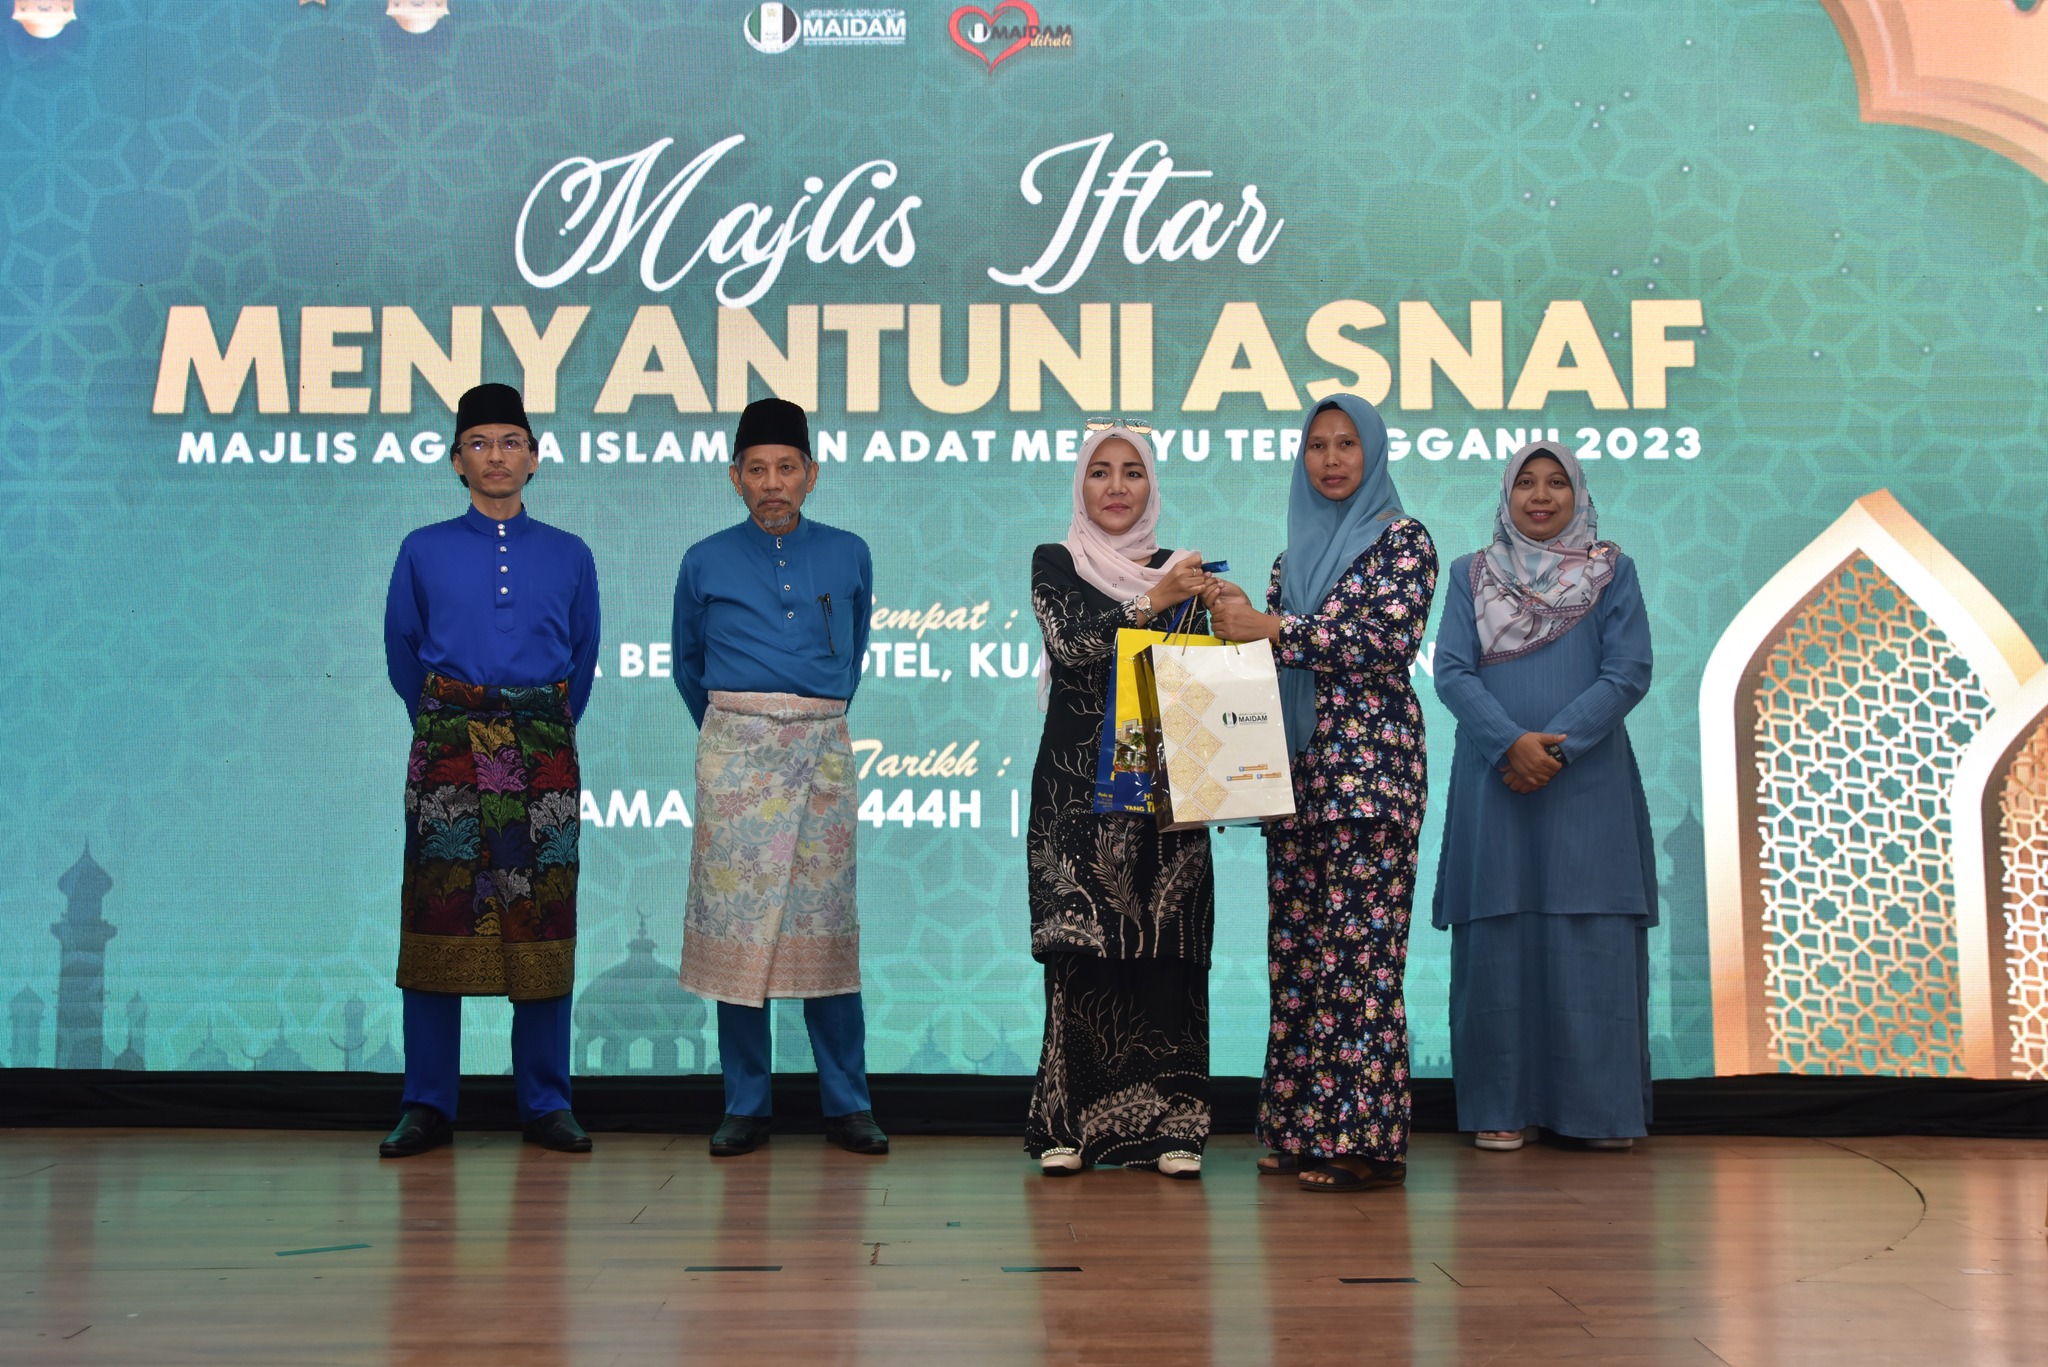 Majlis Iftar Menyantuni Asnaf 2023